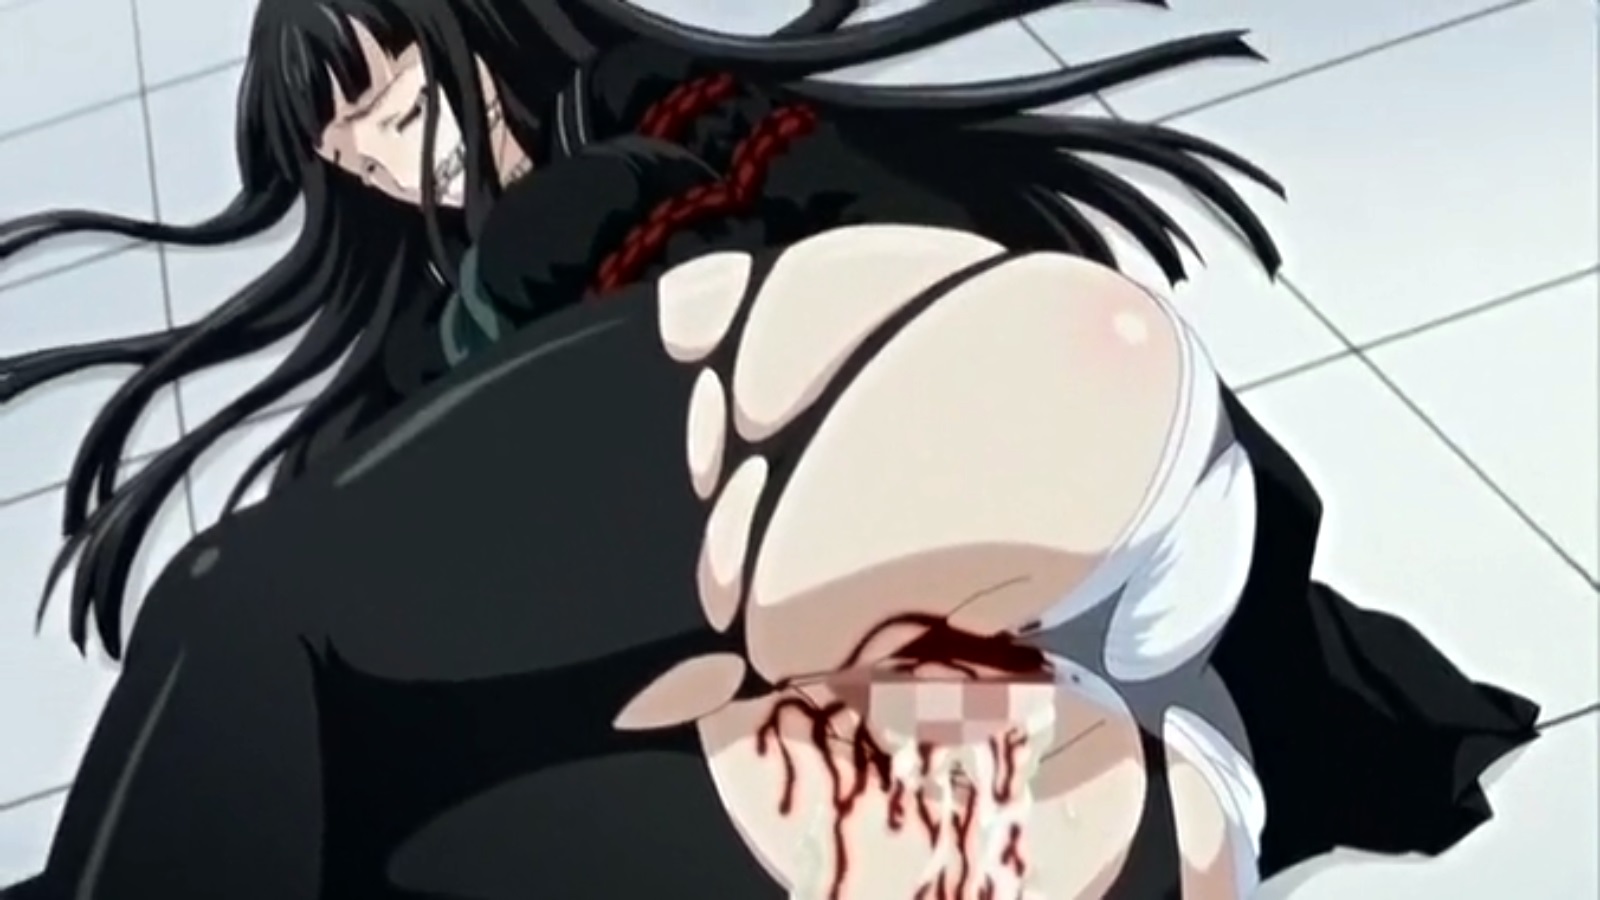 Bloody Hardcore Cartoon Fuck - Brutal Hentai Movie Rape, Blood, Ache, Death | HentaiMovie.Tv